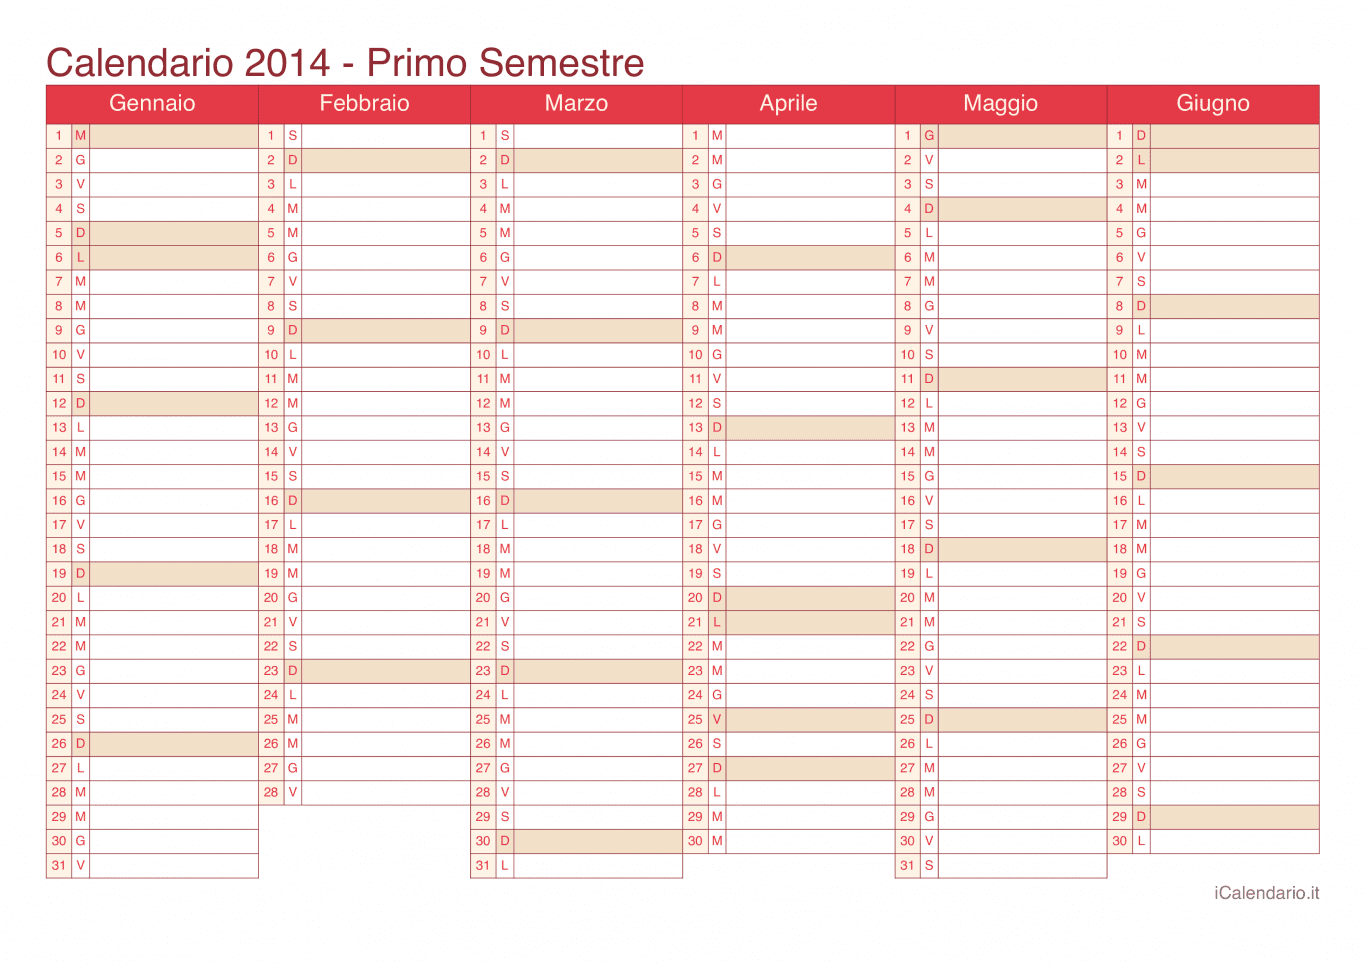 Calendario semestrale 2014 - Cherry